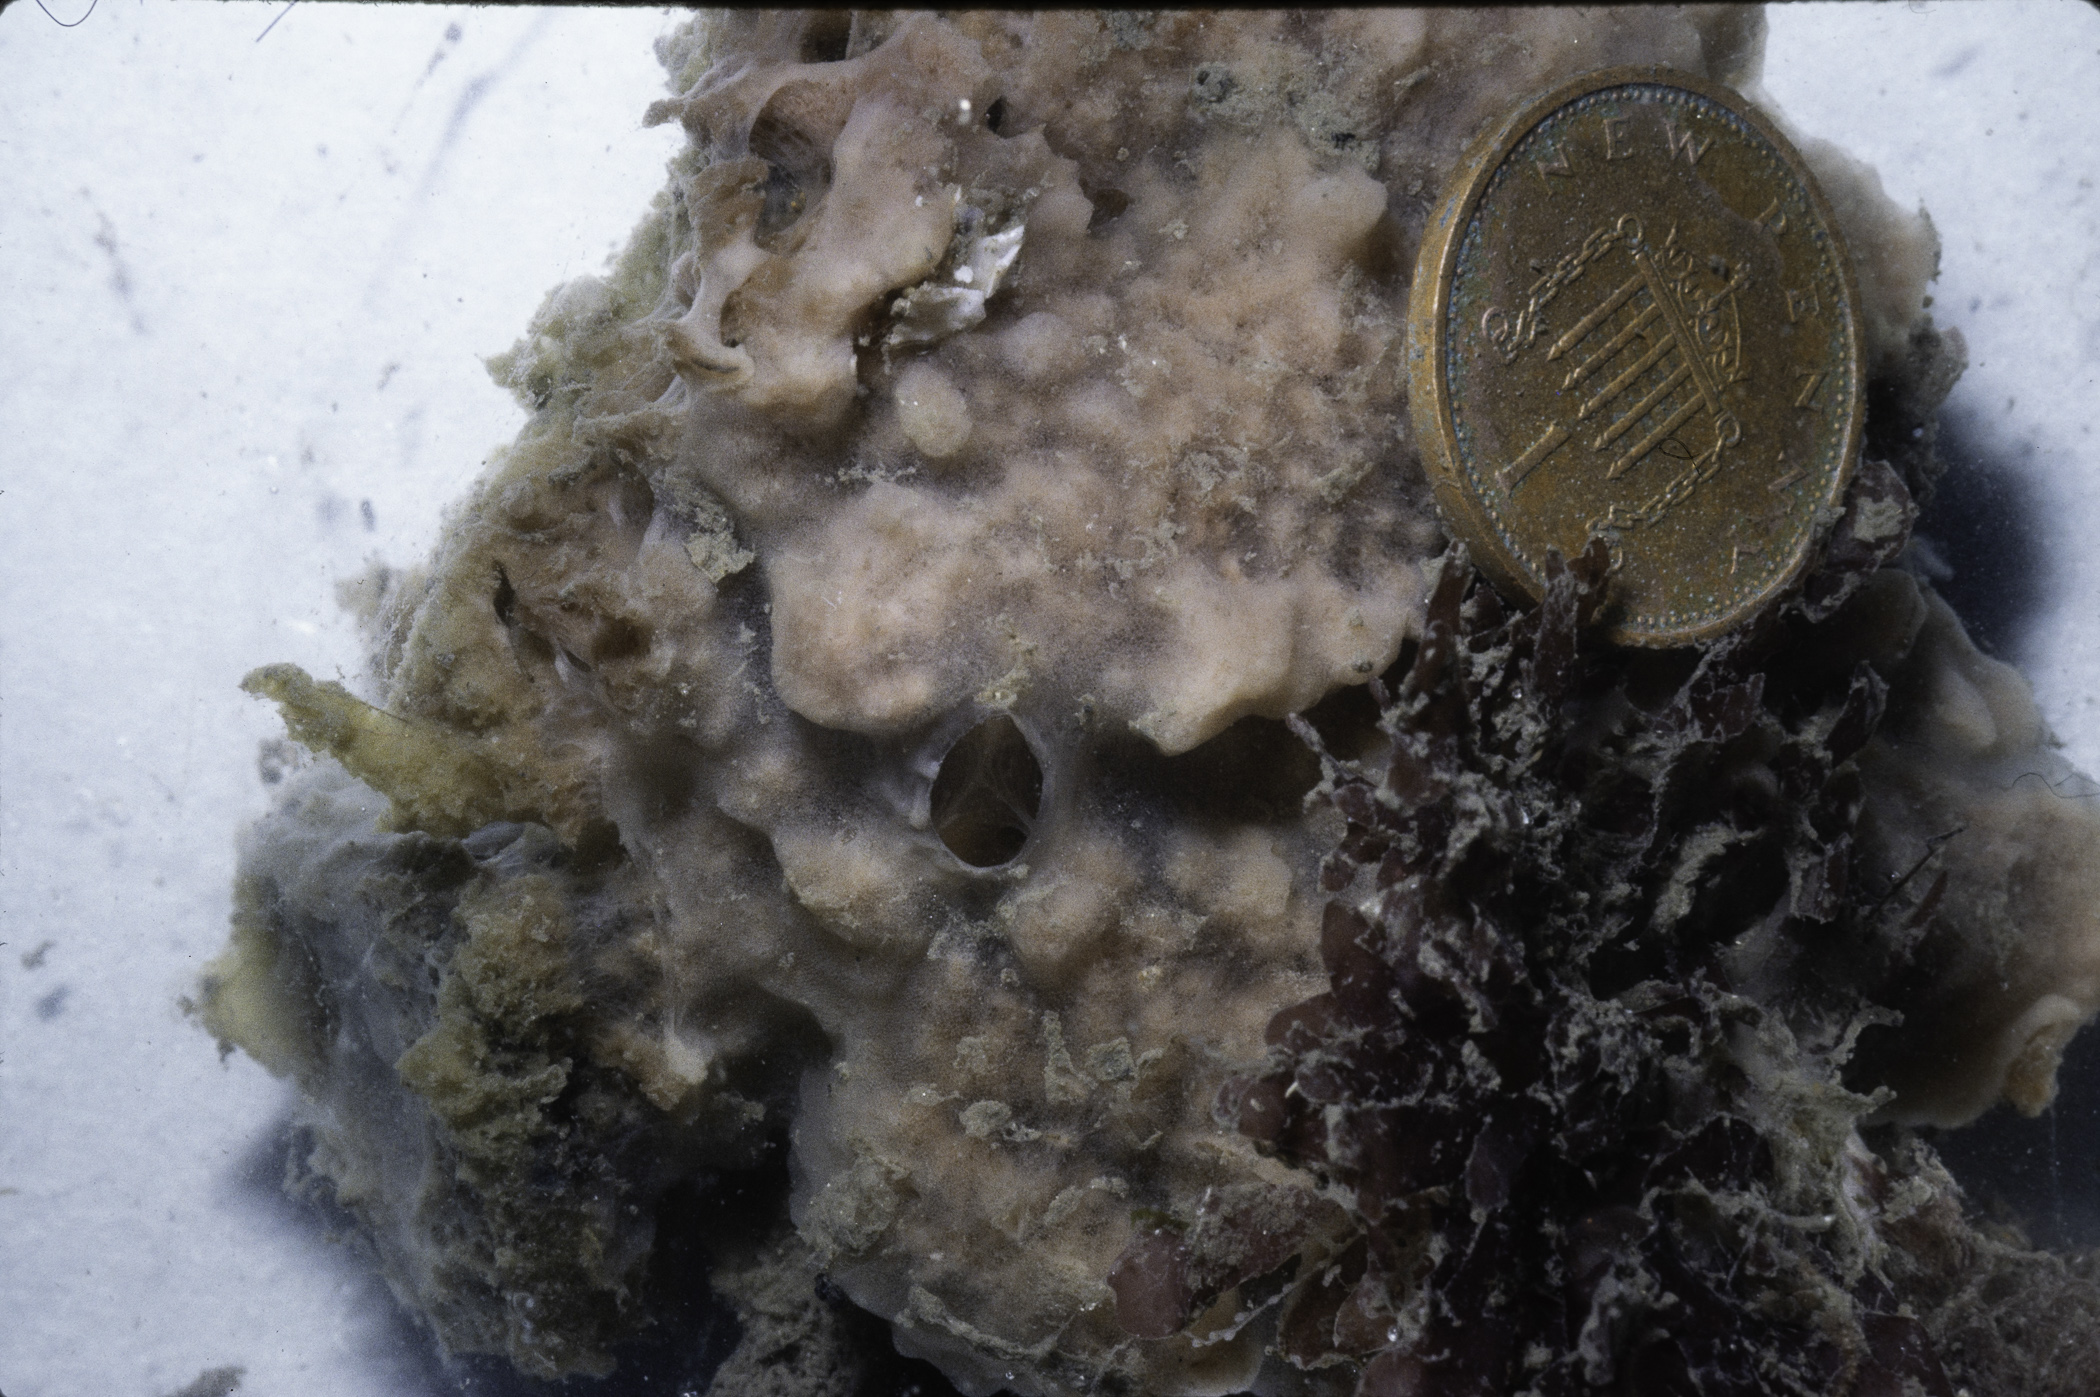 Myxilla rosacea. Site: Colin Rock, Strangford Lough. 